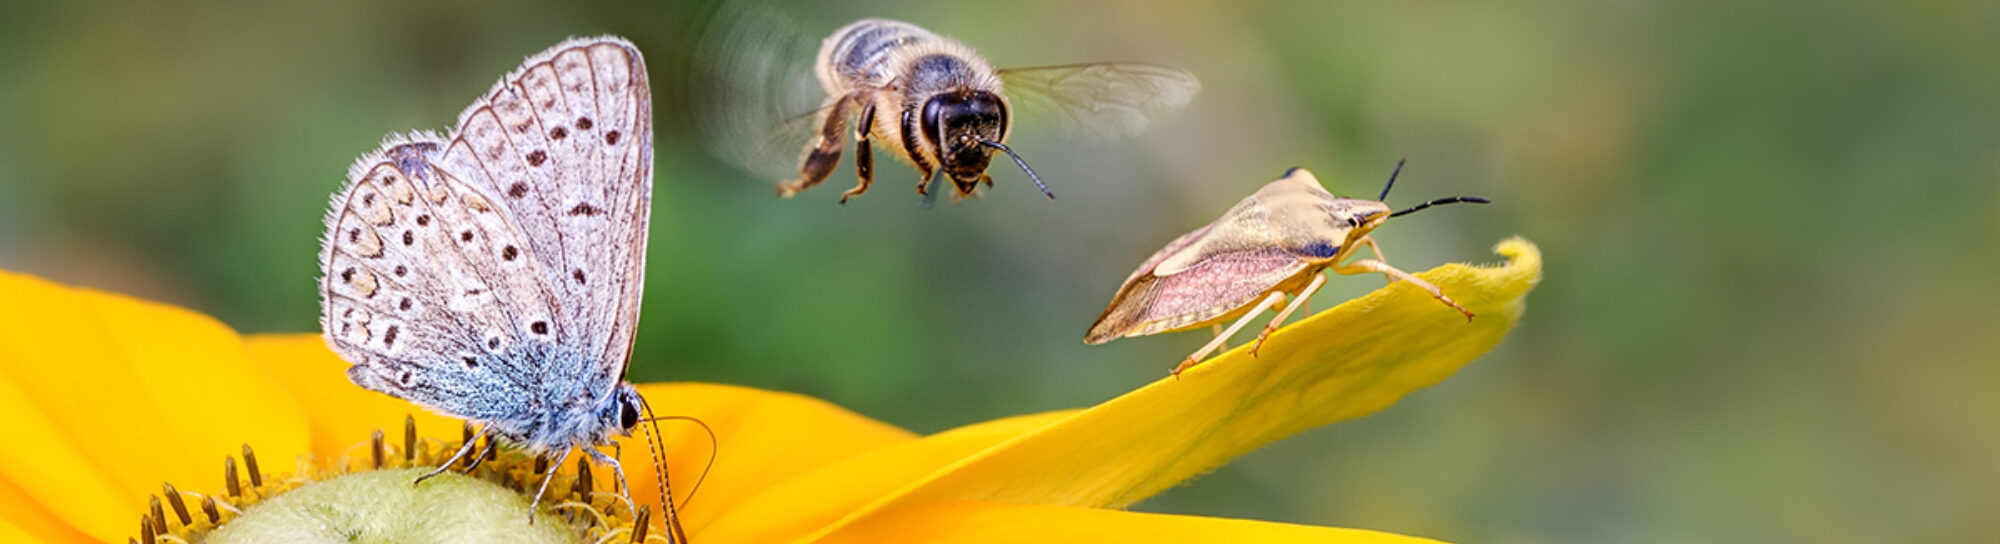 «Pestizide sind schuld am Insektensterben.»